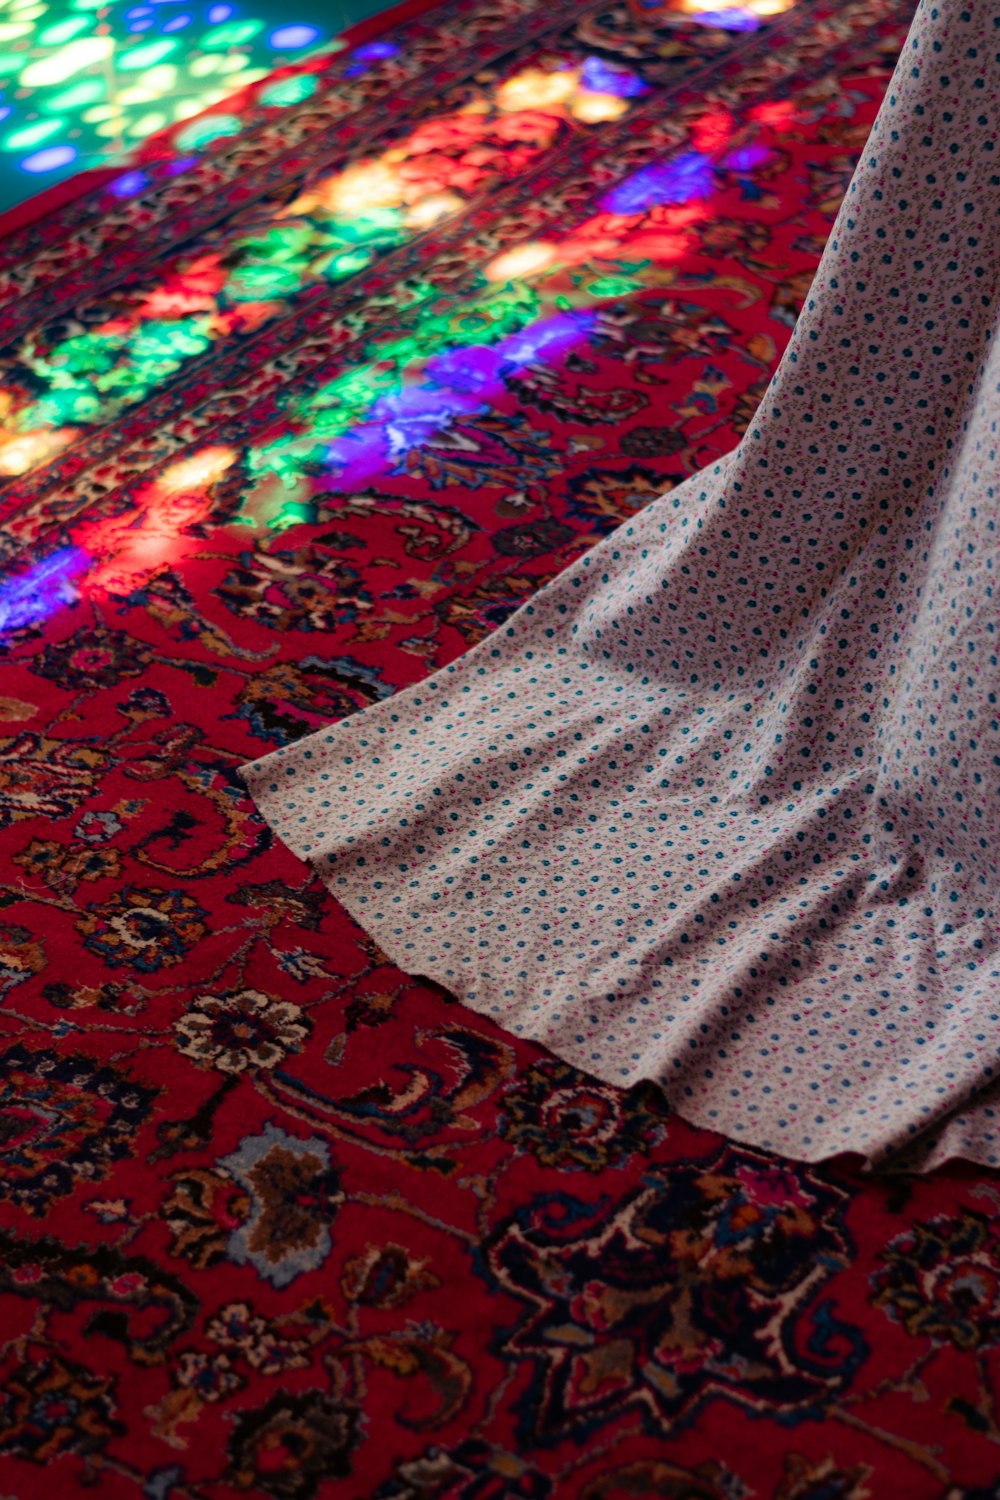 Una persona parada sobre una alfombra frente a una vidriera